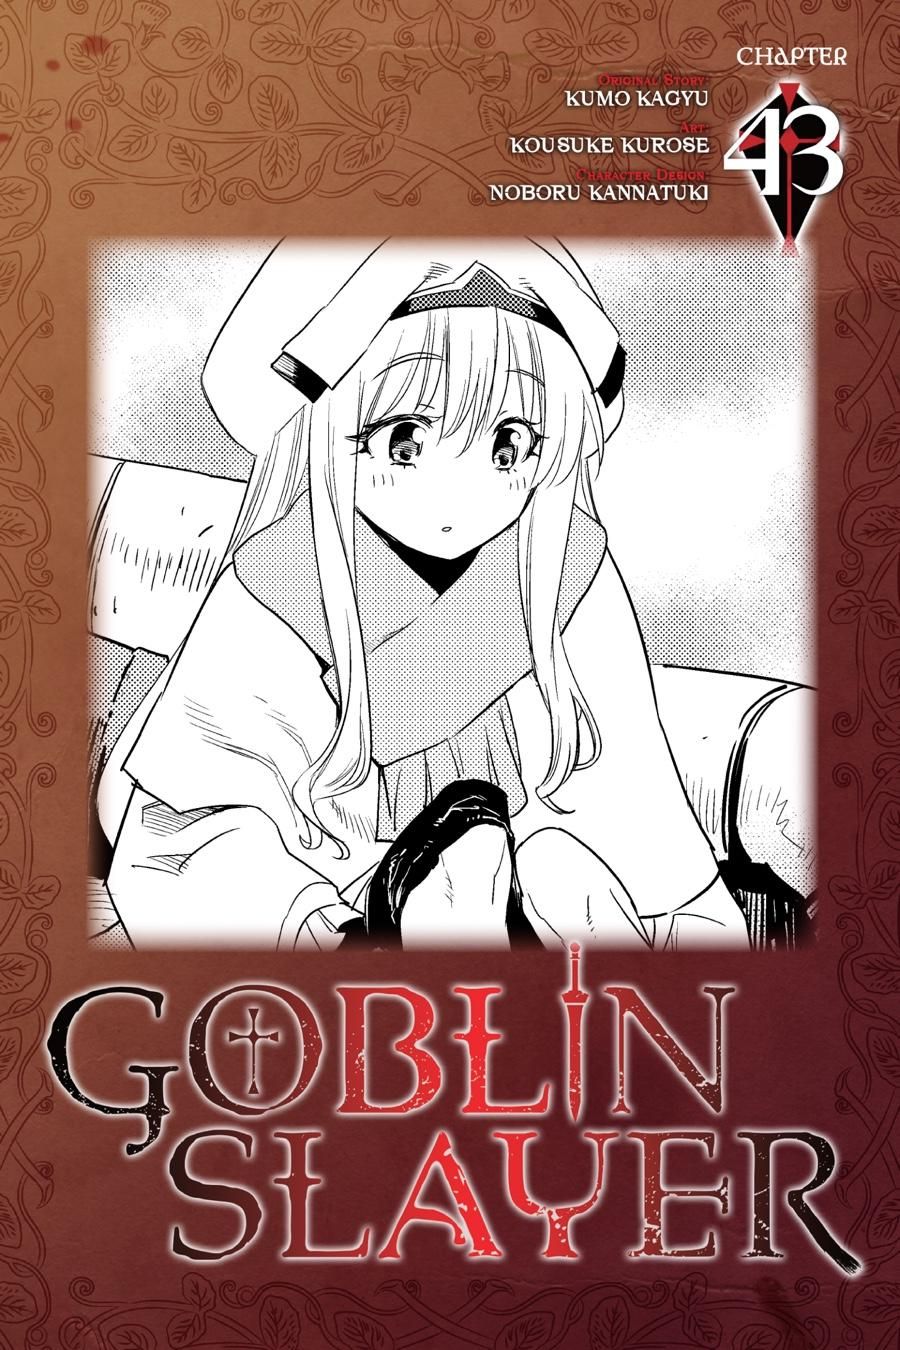 Manga Volume 1, Goblin Slayer Wiki